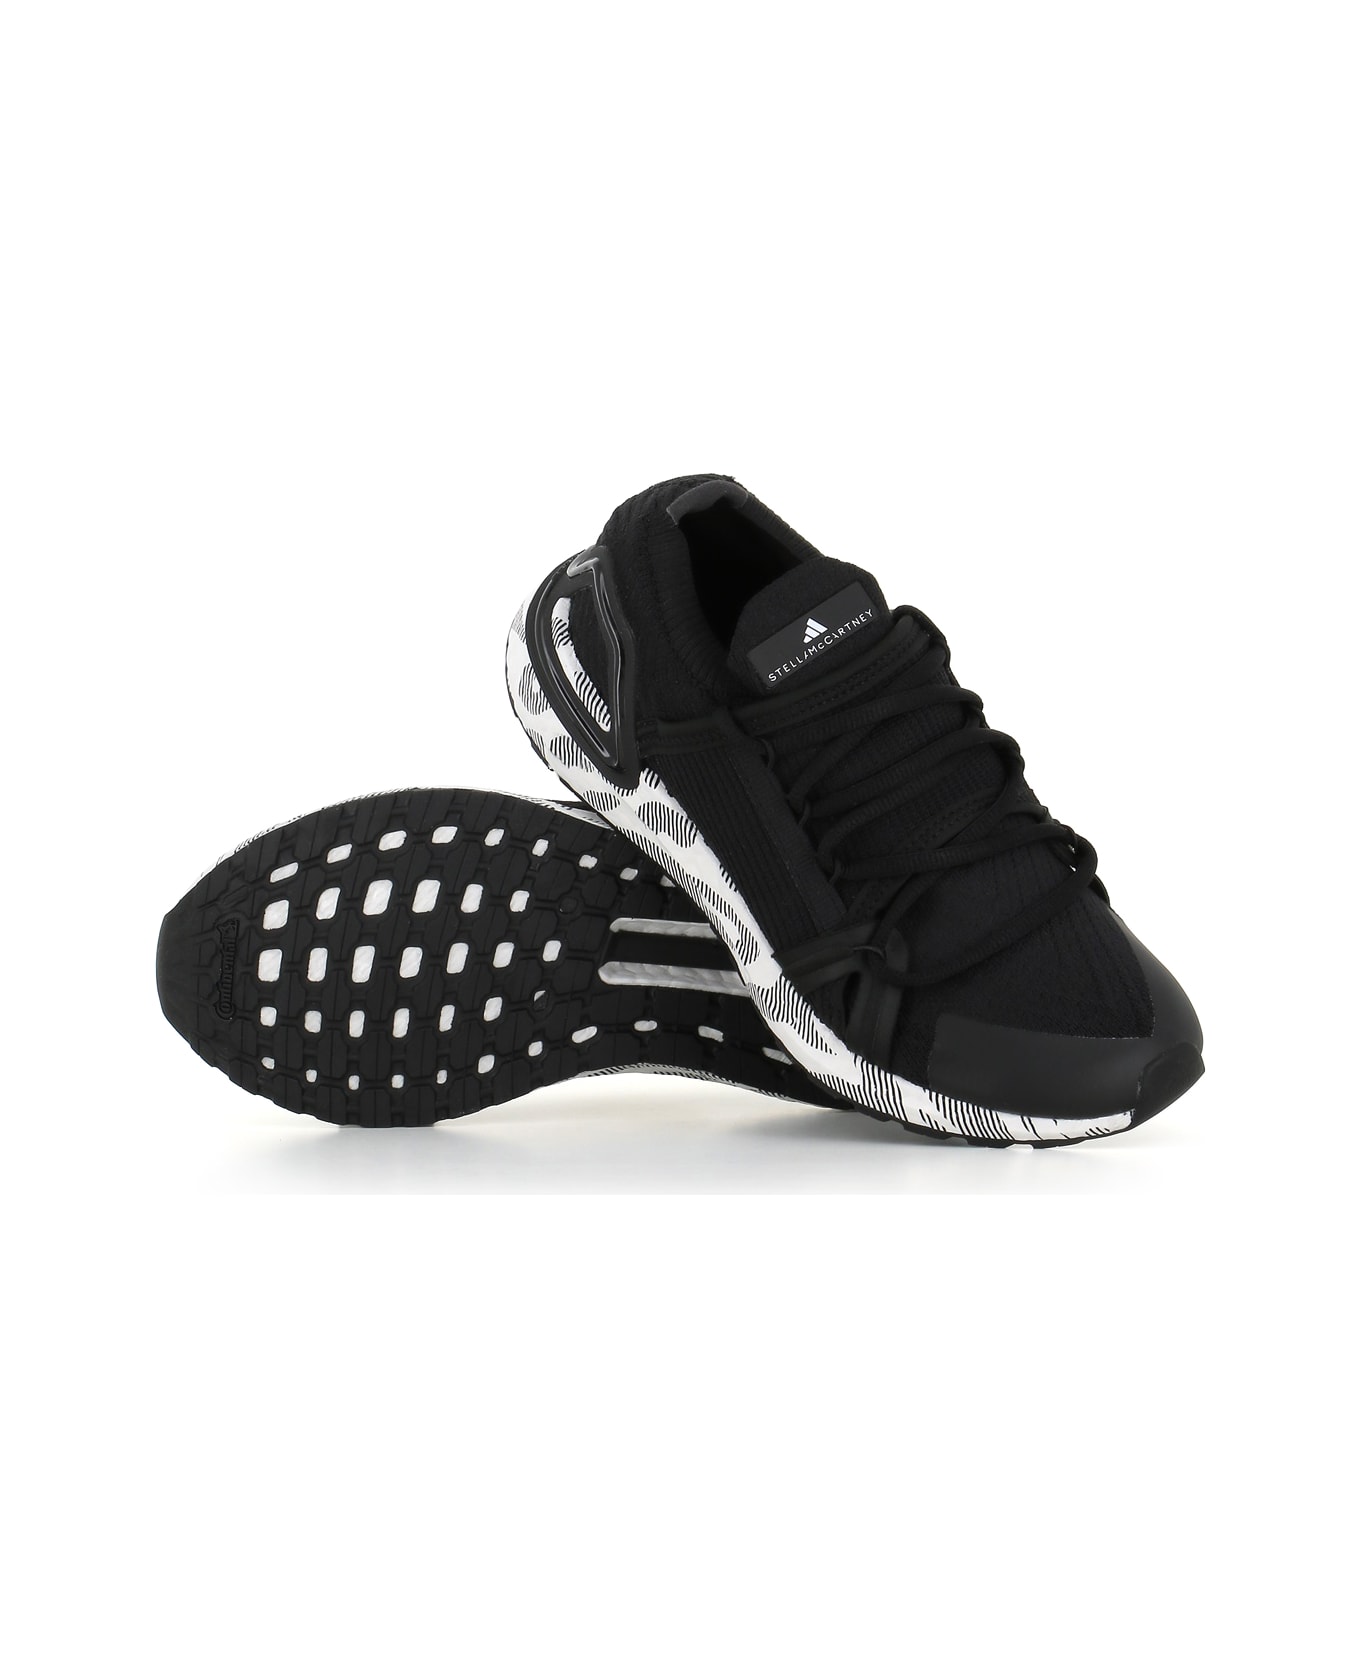 Adidas by Stella McCartney Ultraboost 20 Low-top Sneakers - Black/white